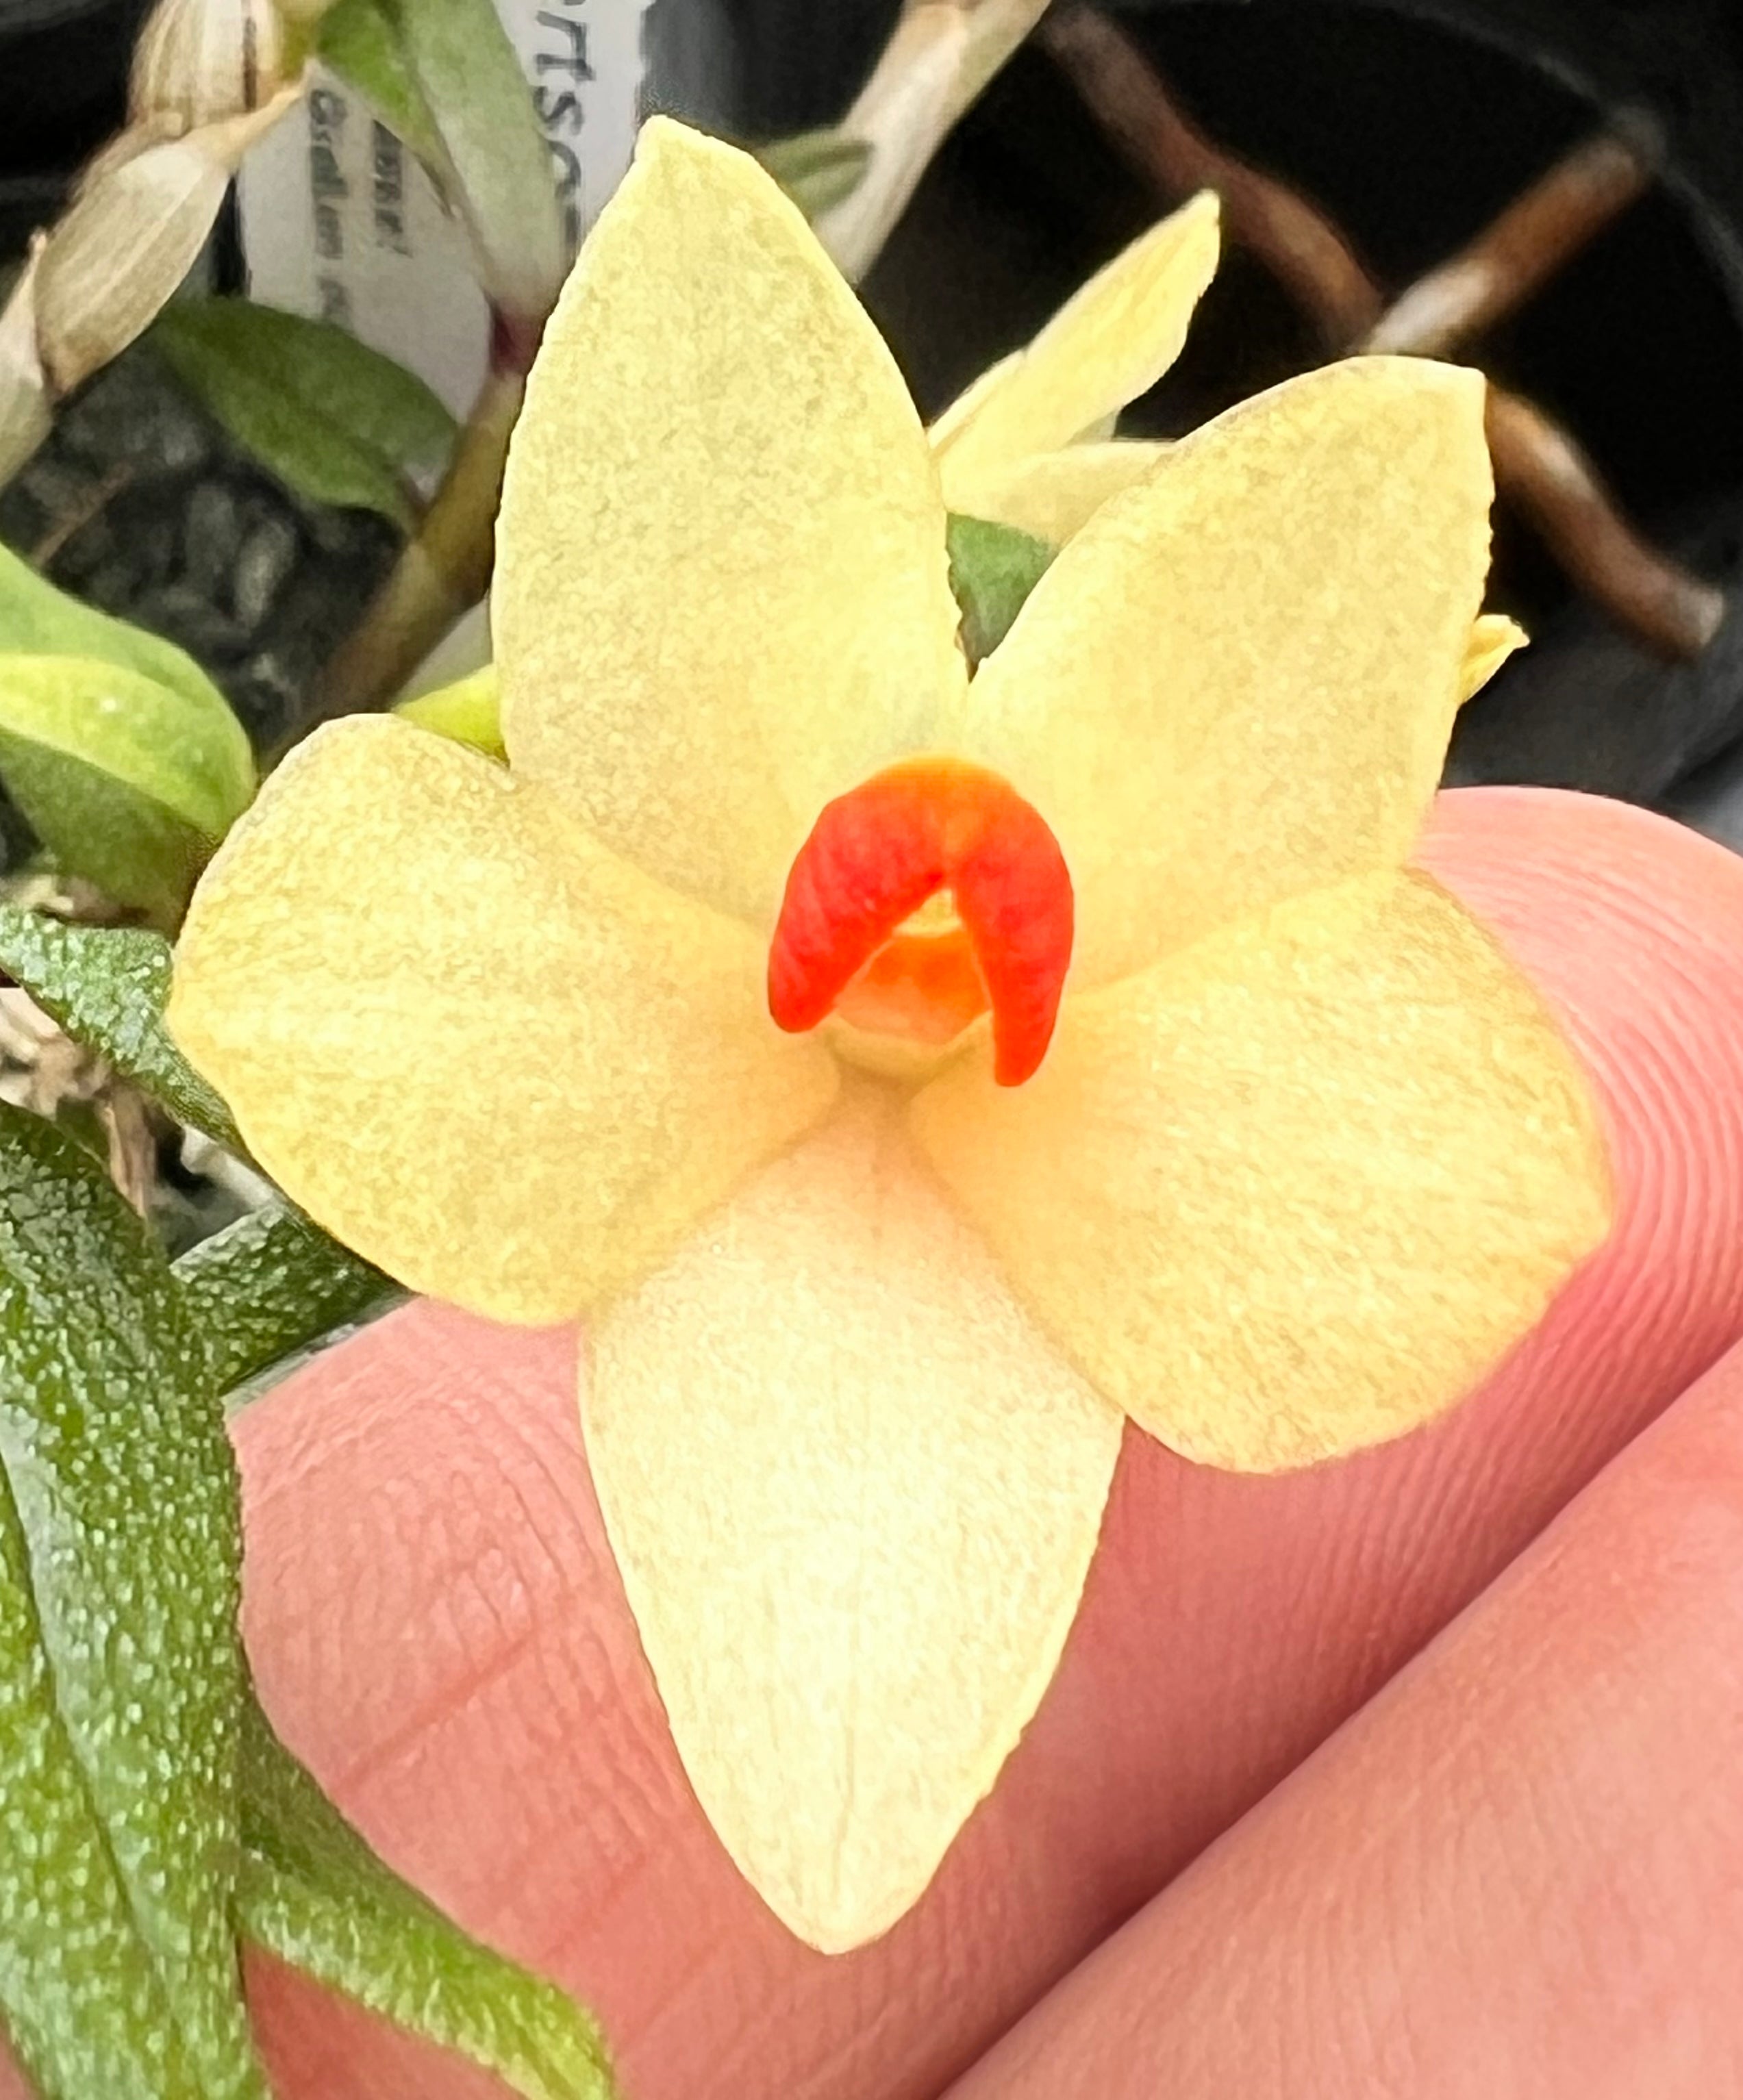 Dendrobium cuthbersonii "Yellow"